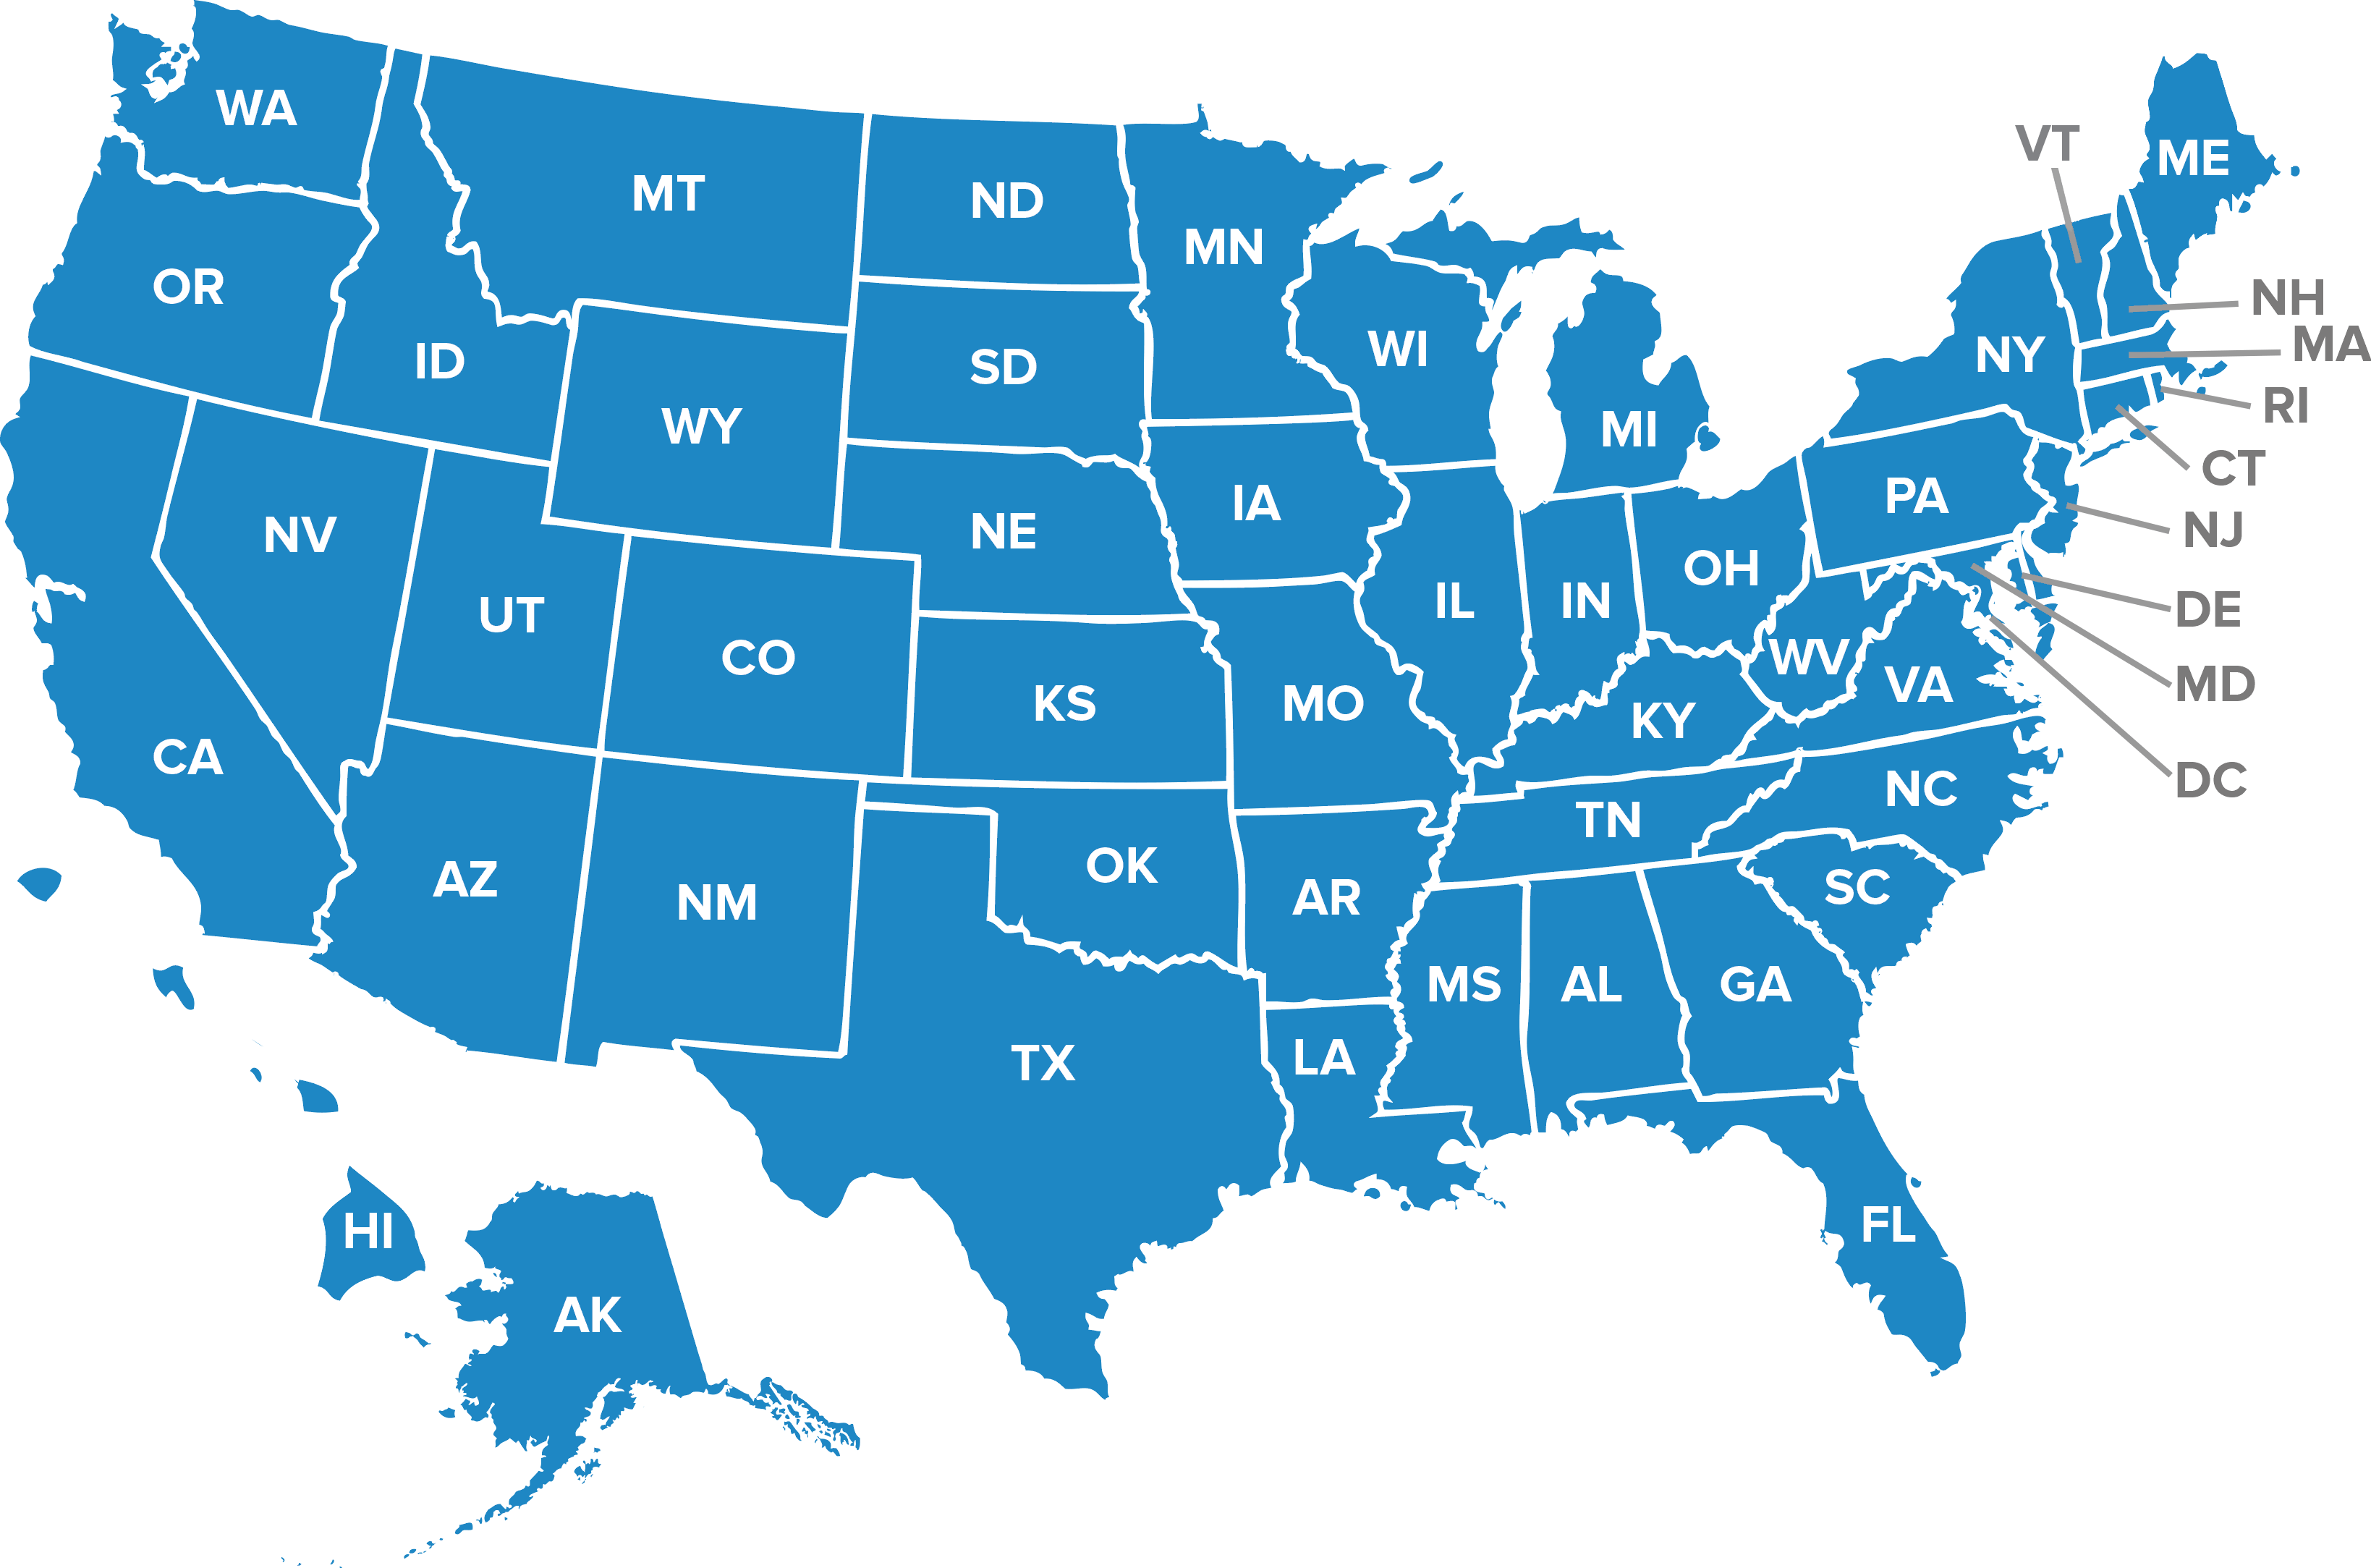 USA States Map. The United States of America карта. Штаты США United States. Карта США со Штатами. 1970 год символ штата сша